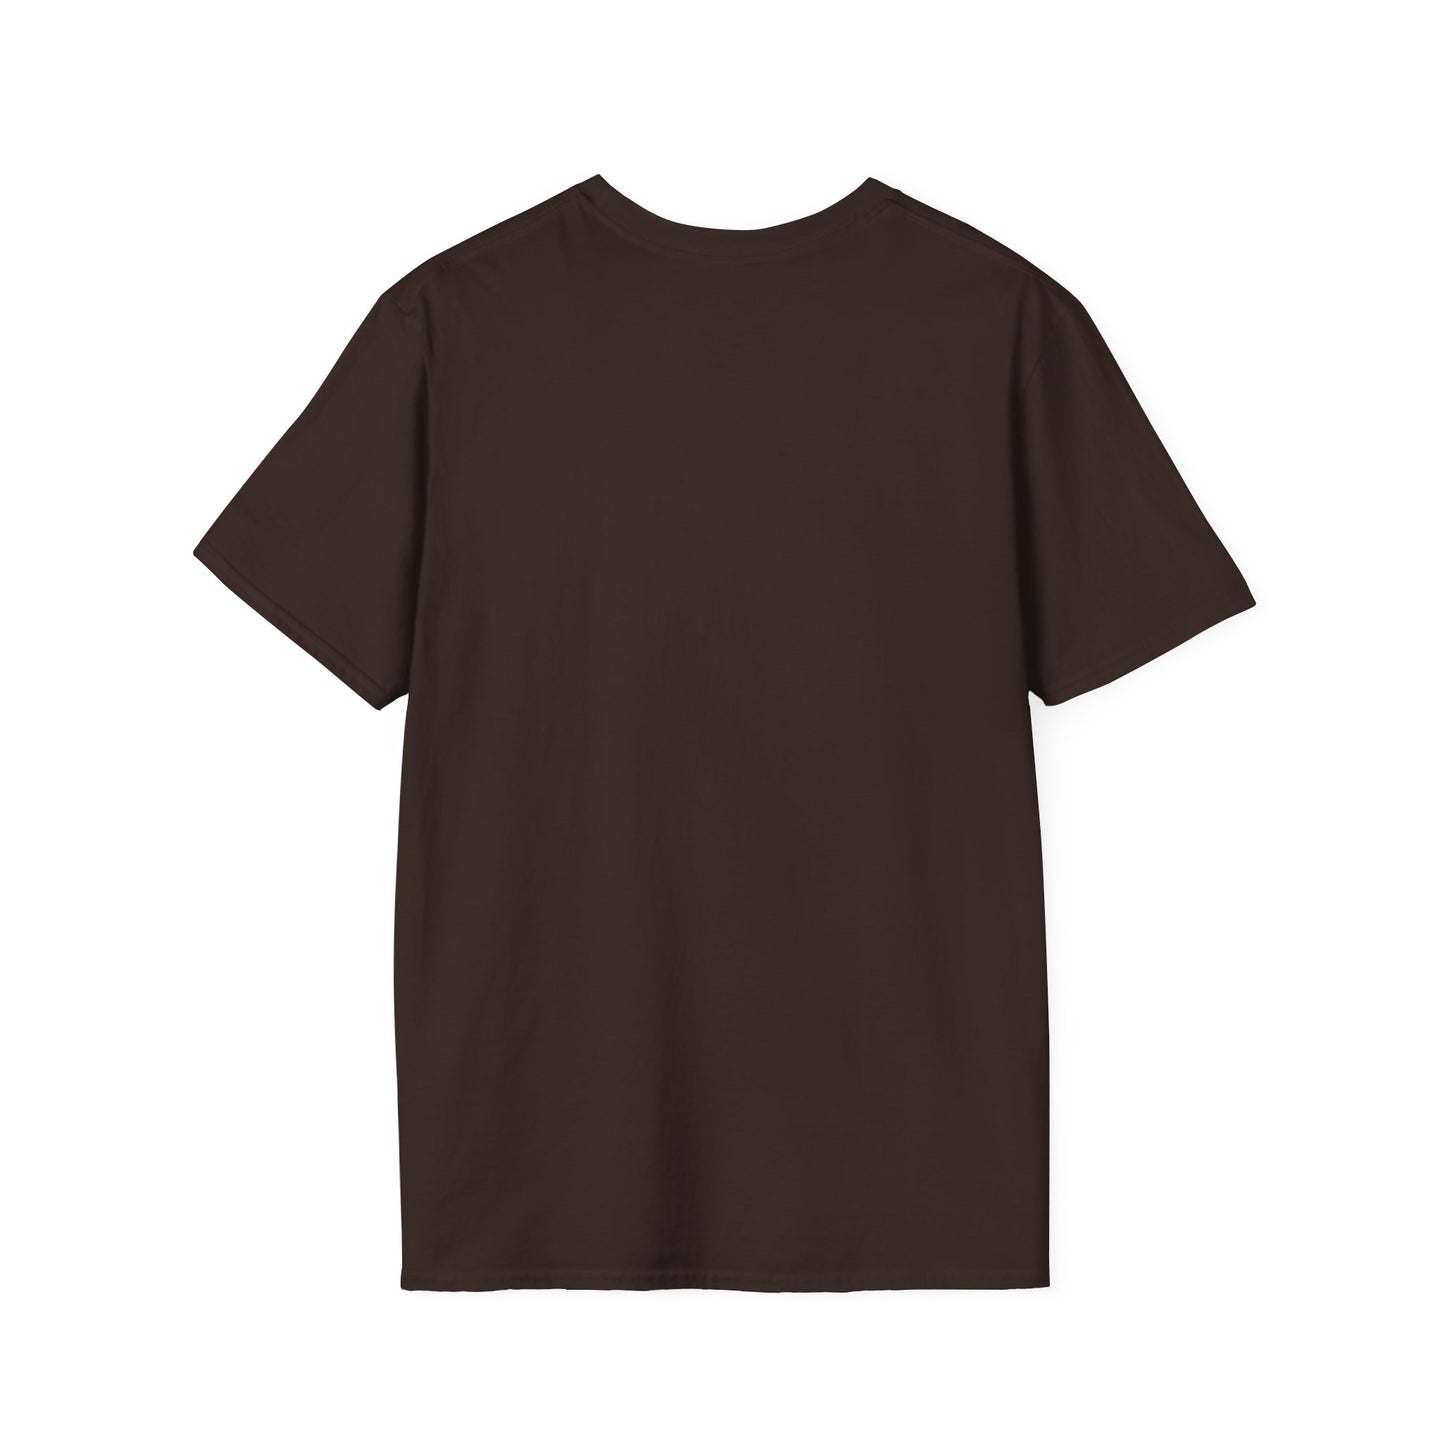 WINDSPRITE CARTOON -  Unisex Softstyle T-Shirt